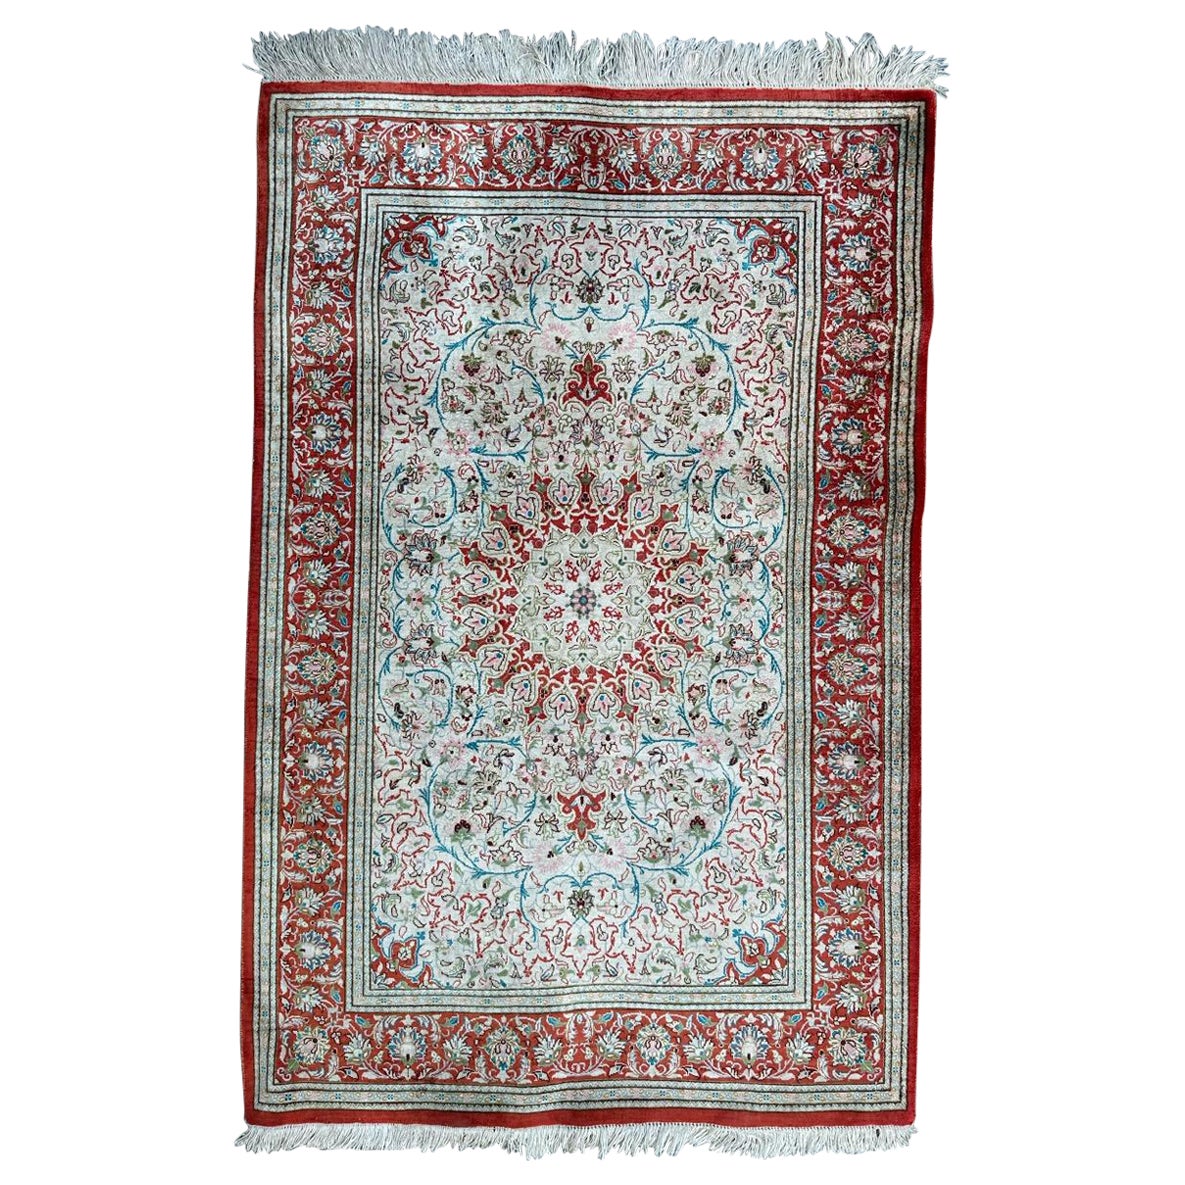 Bobyrug’s Nice early 21st century fine little silk Qom rug 